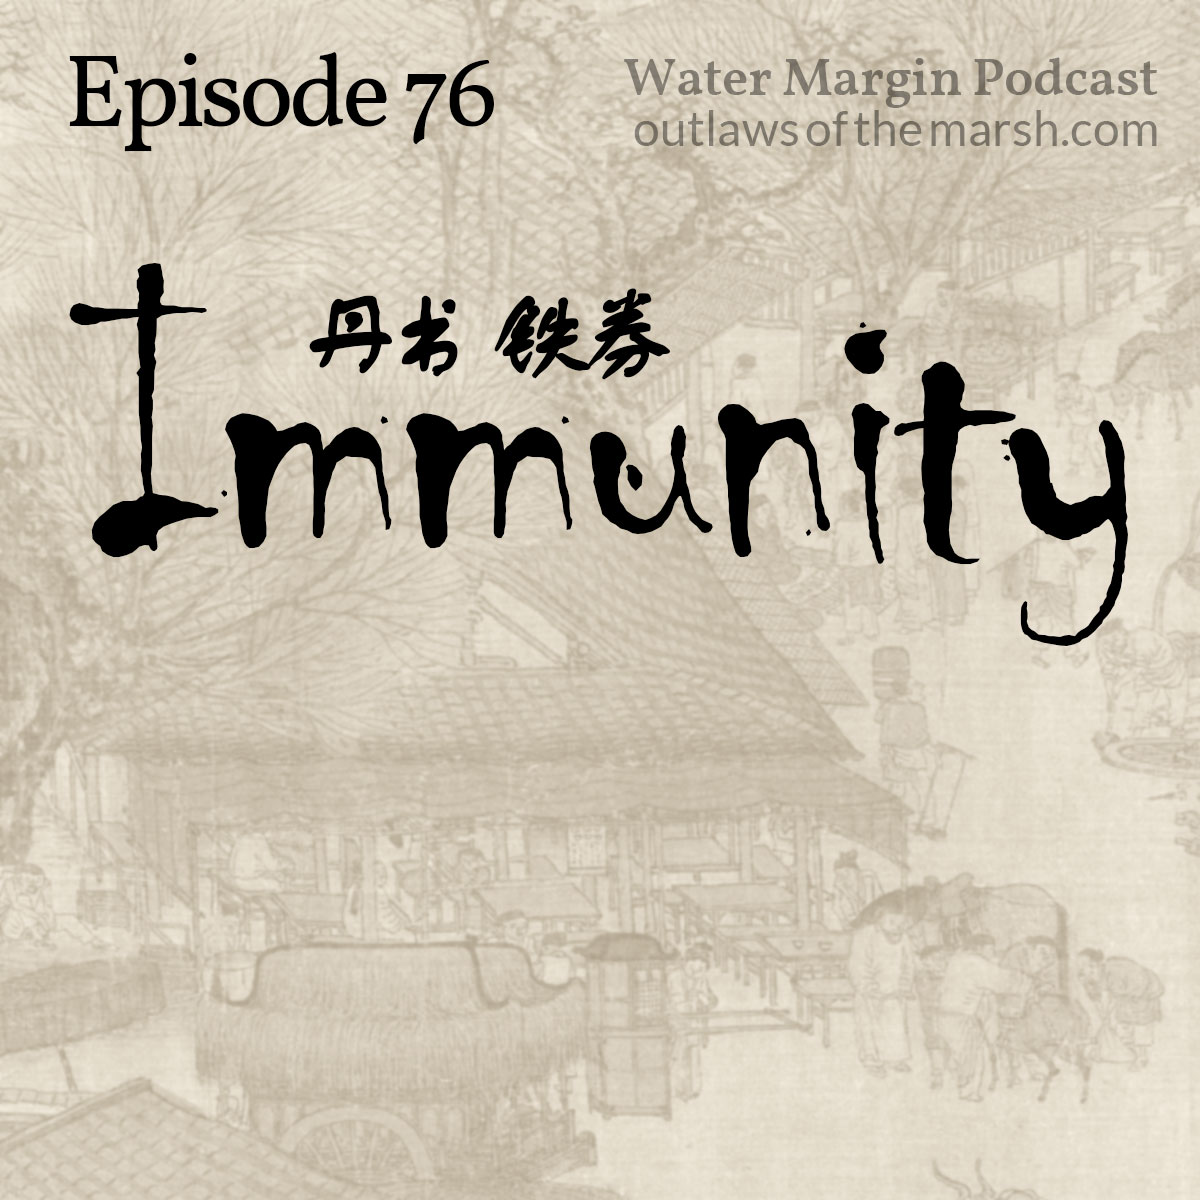 Water Margin Podcast: Episode 076